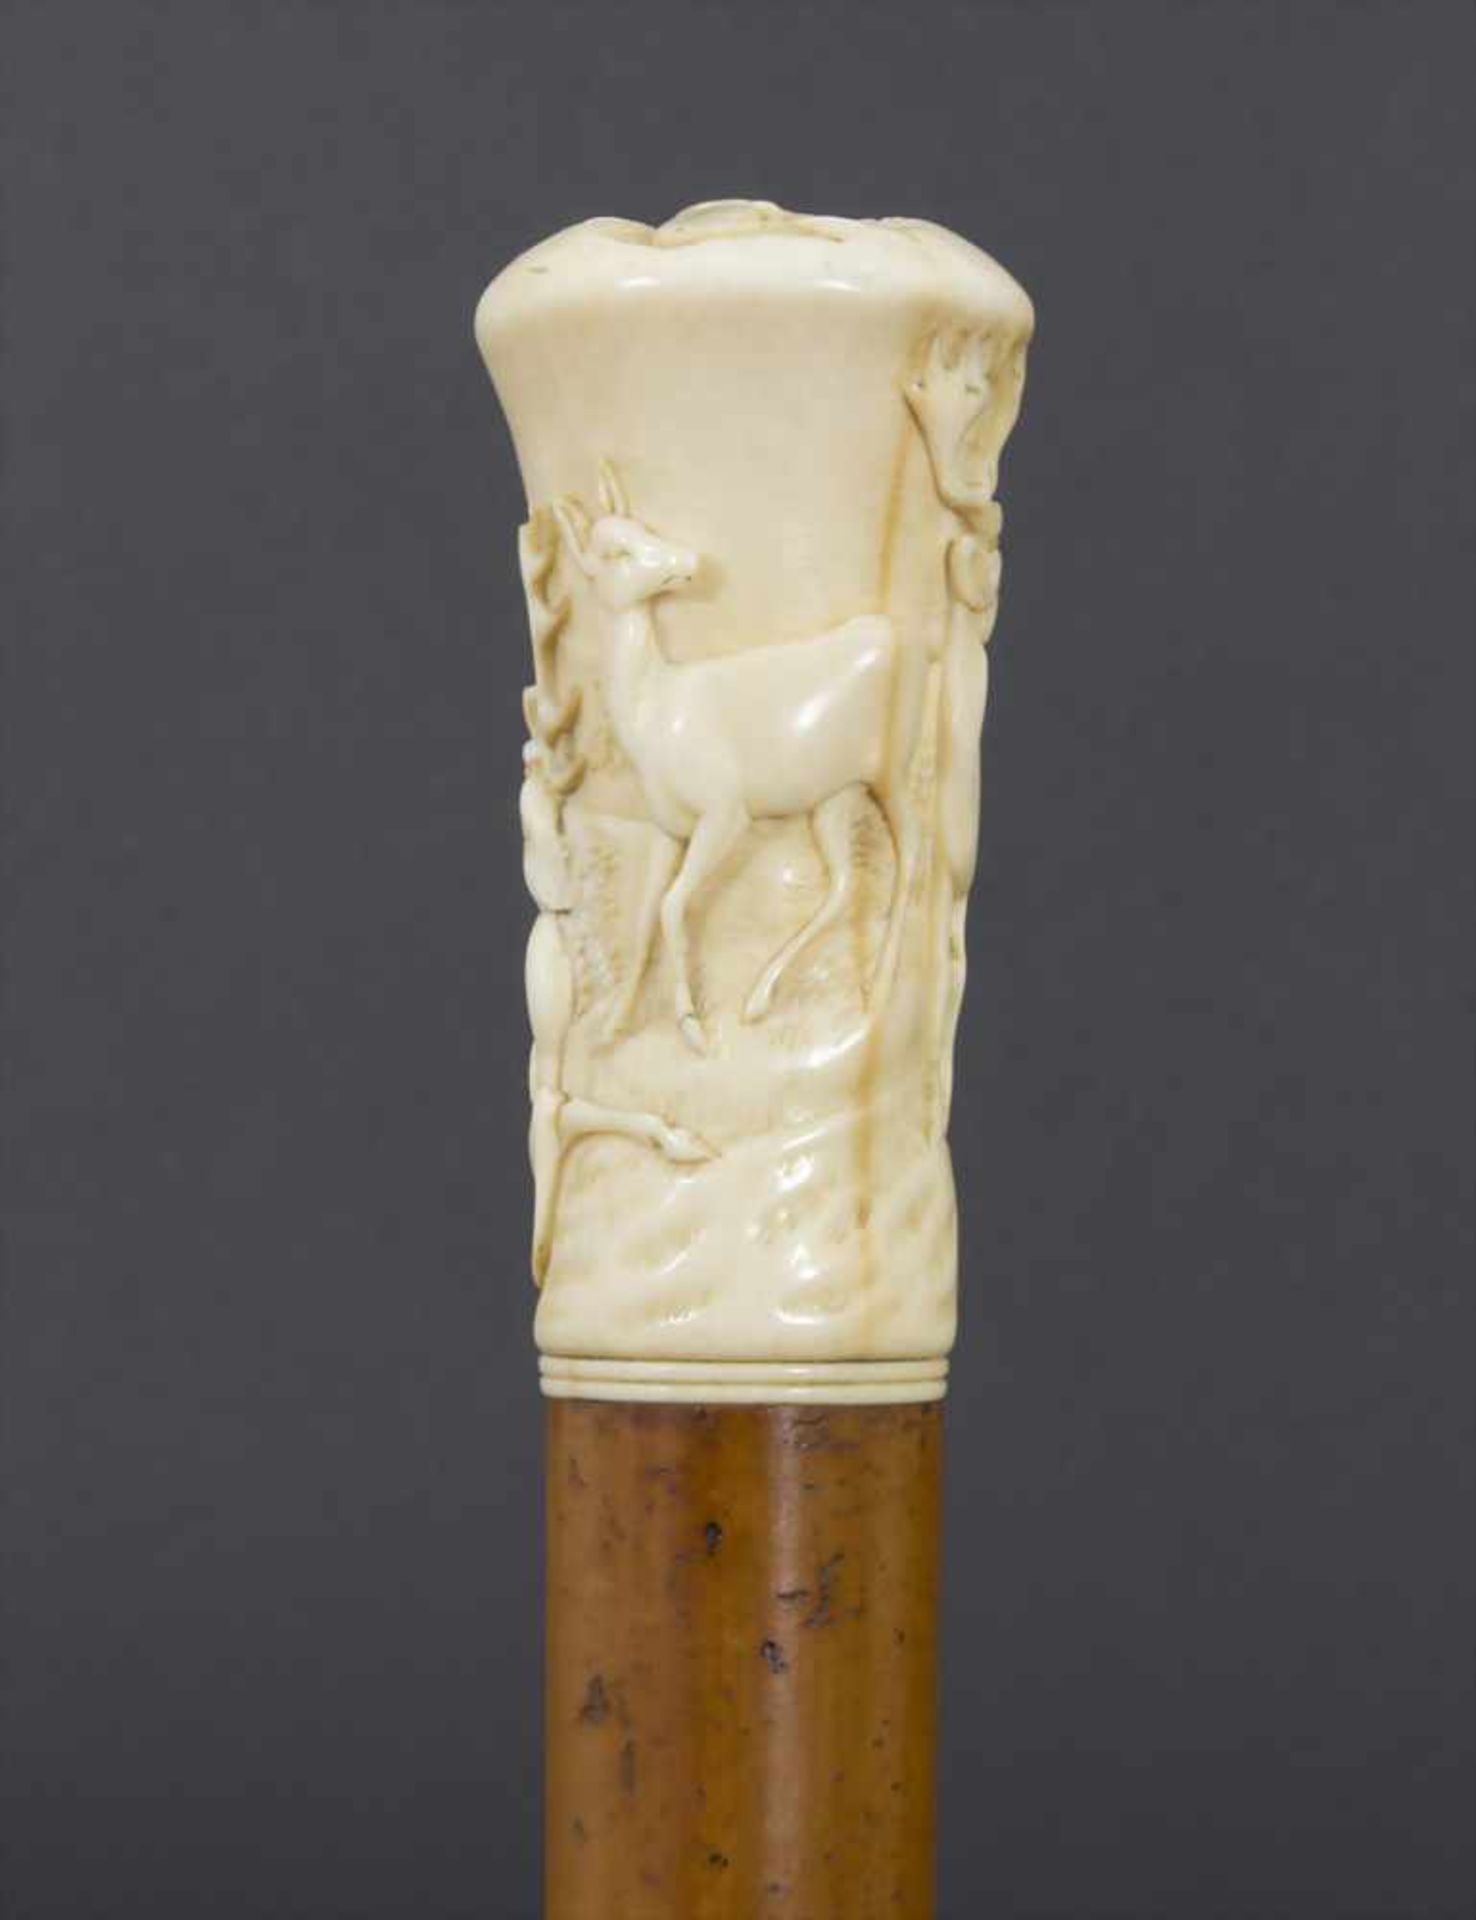 Gehstock mit Elfenbeingriff 'Hirsche' / A cane with ivory handle 'Deer', um 1880Material: